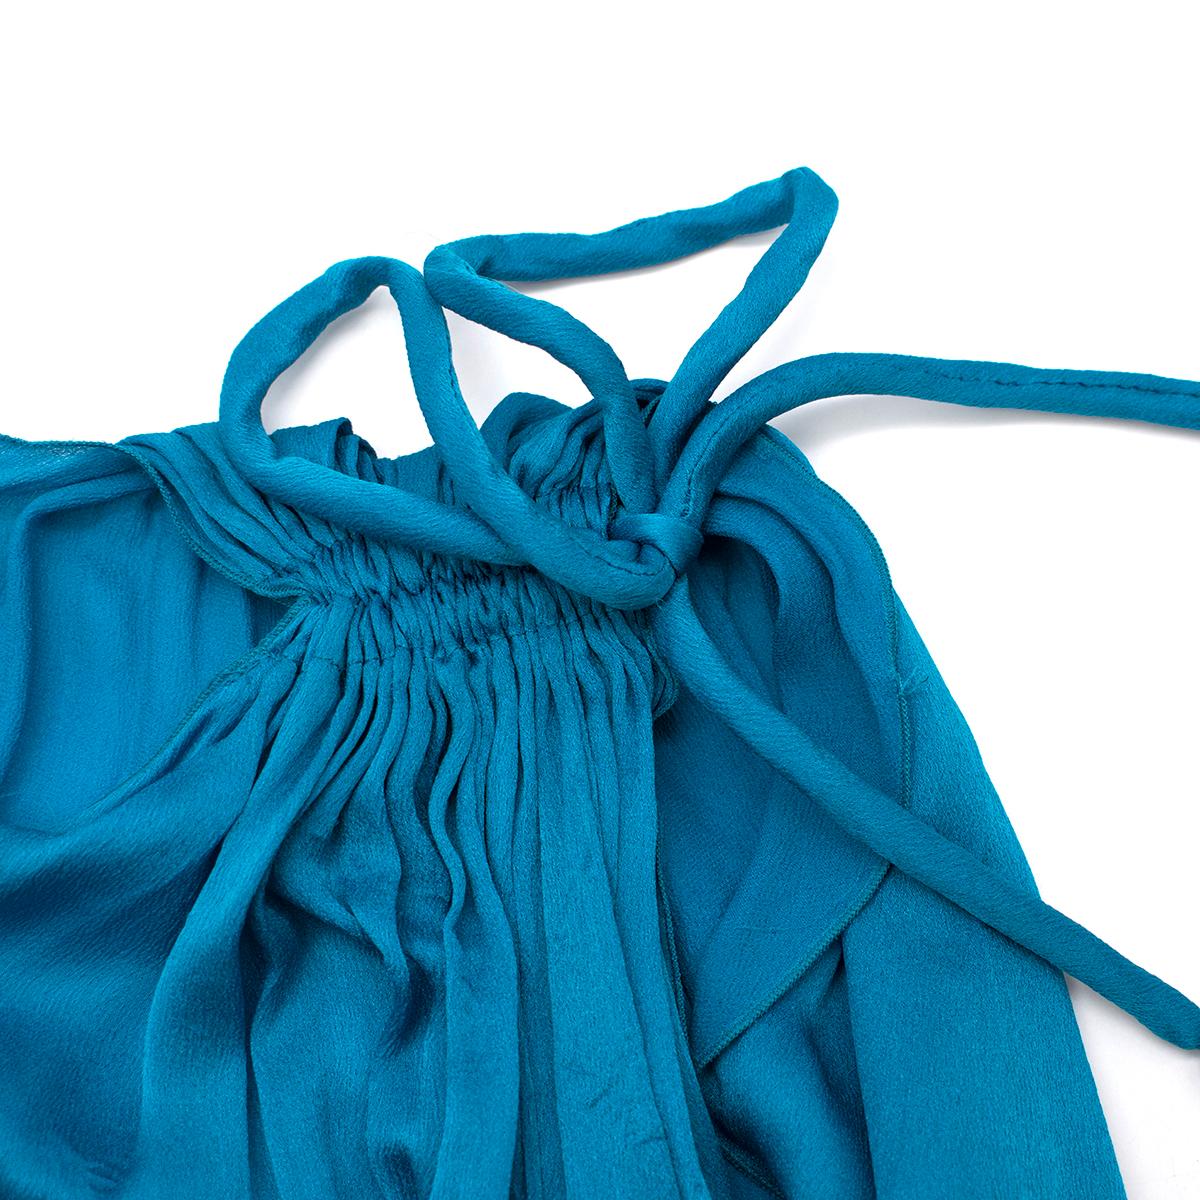 Blue Lanvin Turquoise One-Shoulder Silk Dress - Size US 6